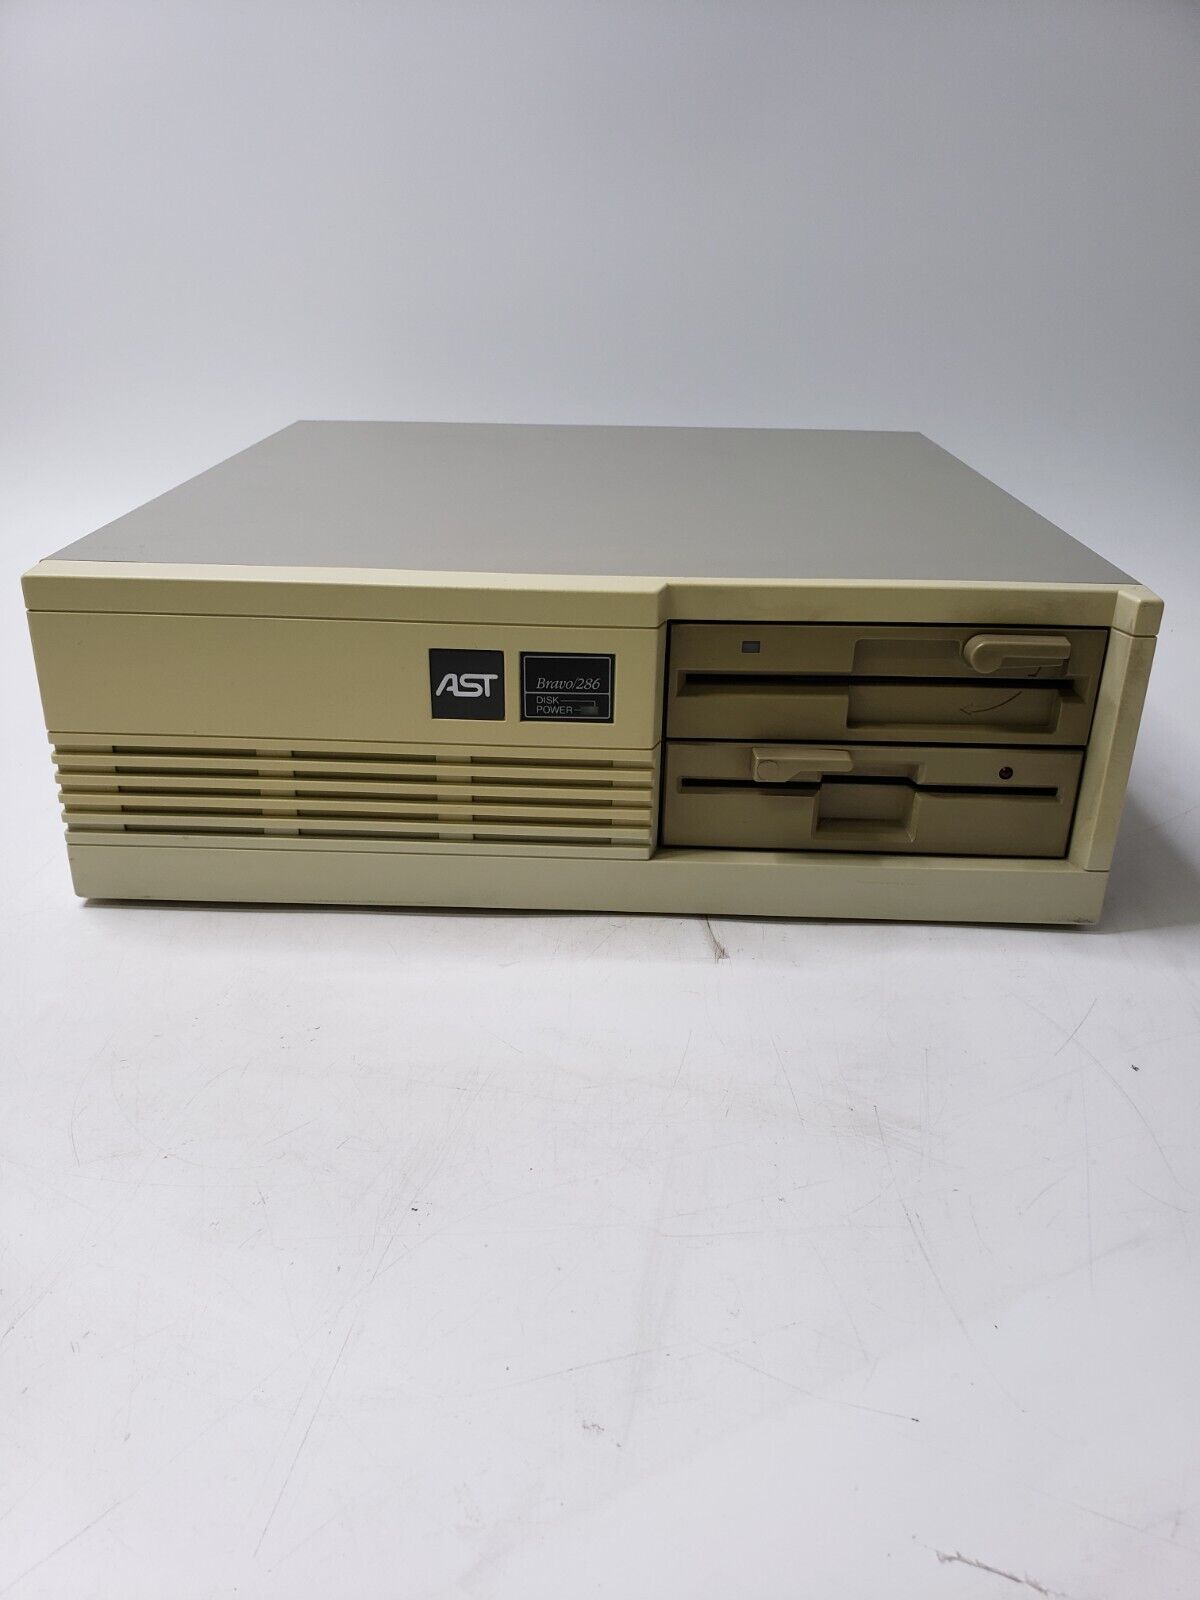 AST Research 500770-003 Desktop Computer System Bravo/286 Model 5